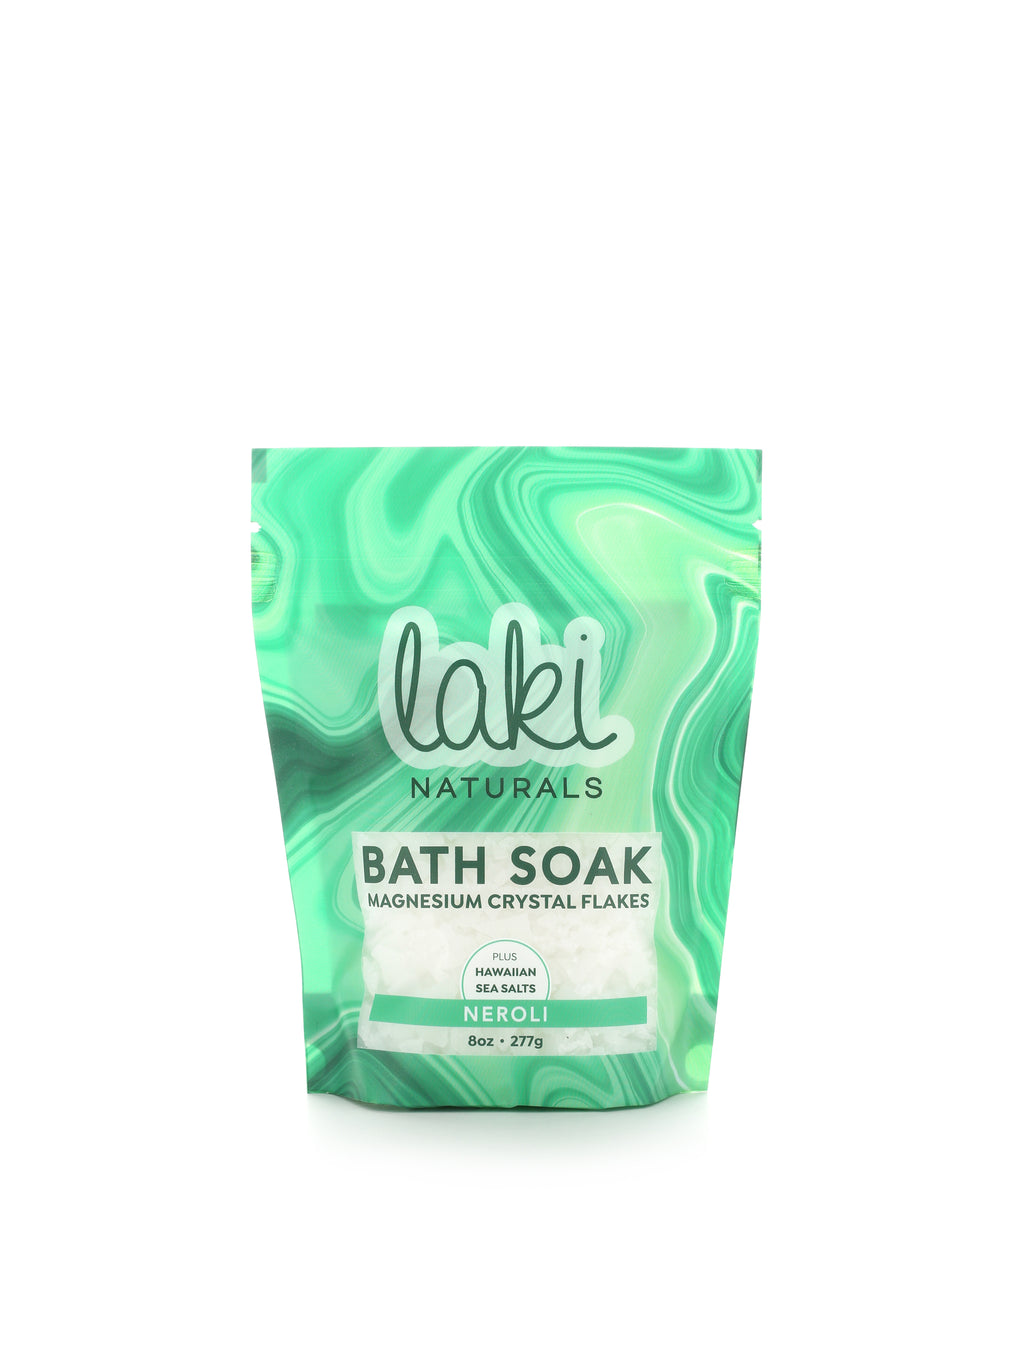 Neroli Magnesium Flakes Bath Soak  - Laki Naturals